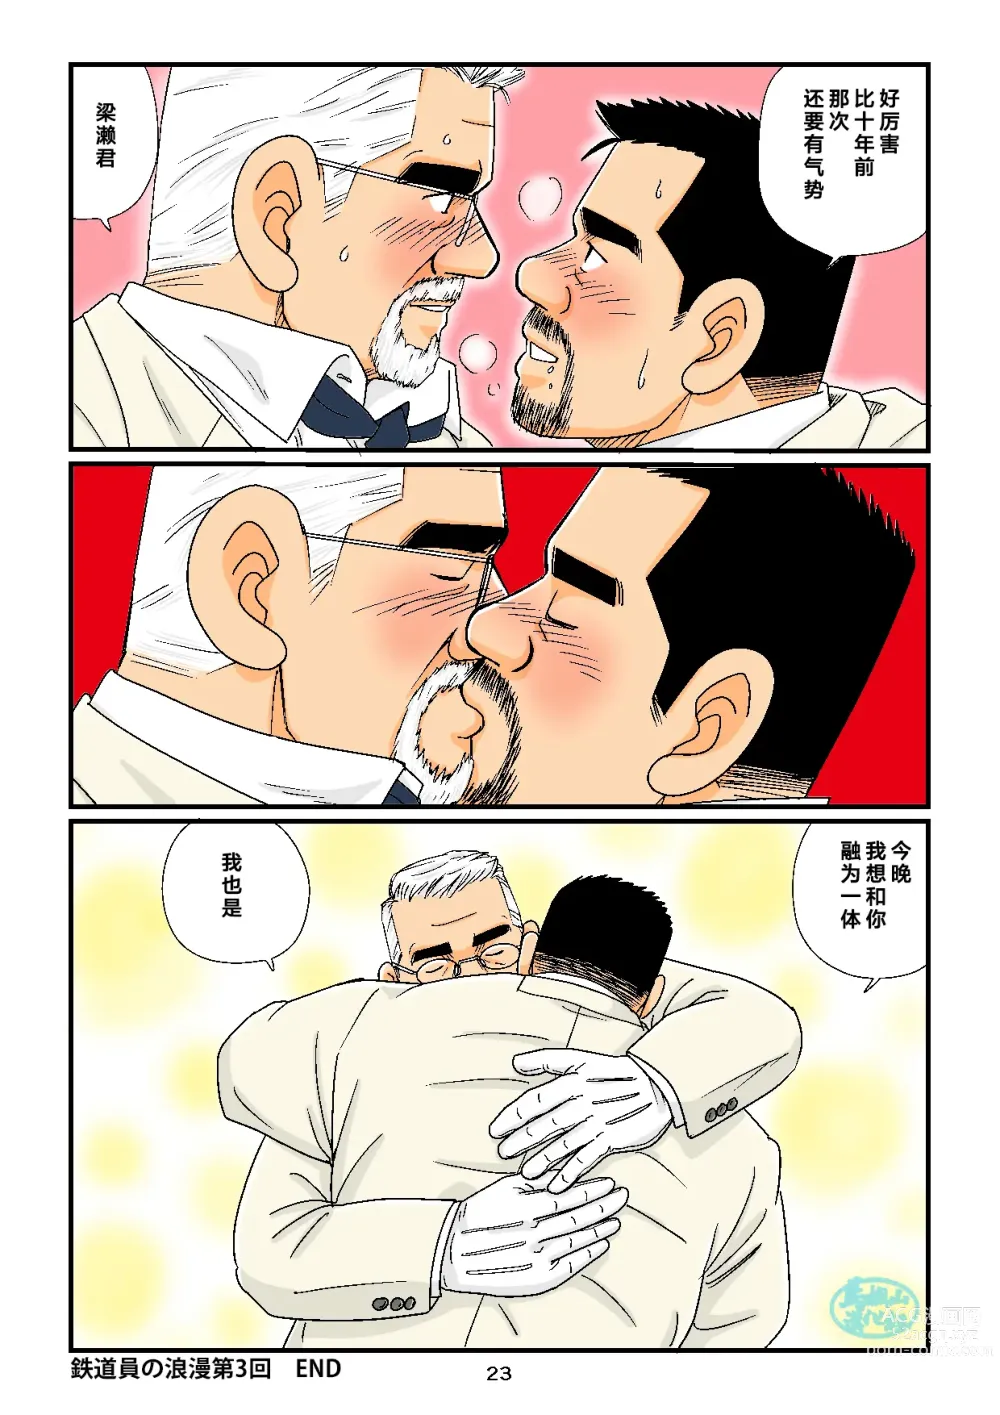 Page 23 of manga 「铁道员的浪漫」 第三回 站长与铁道员之夜